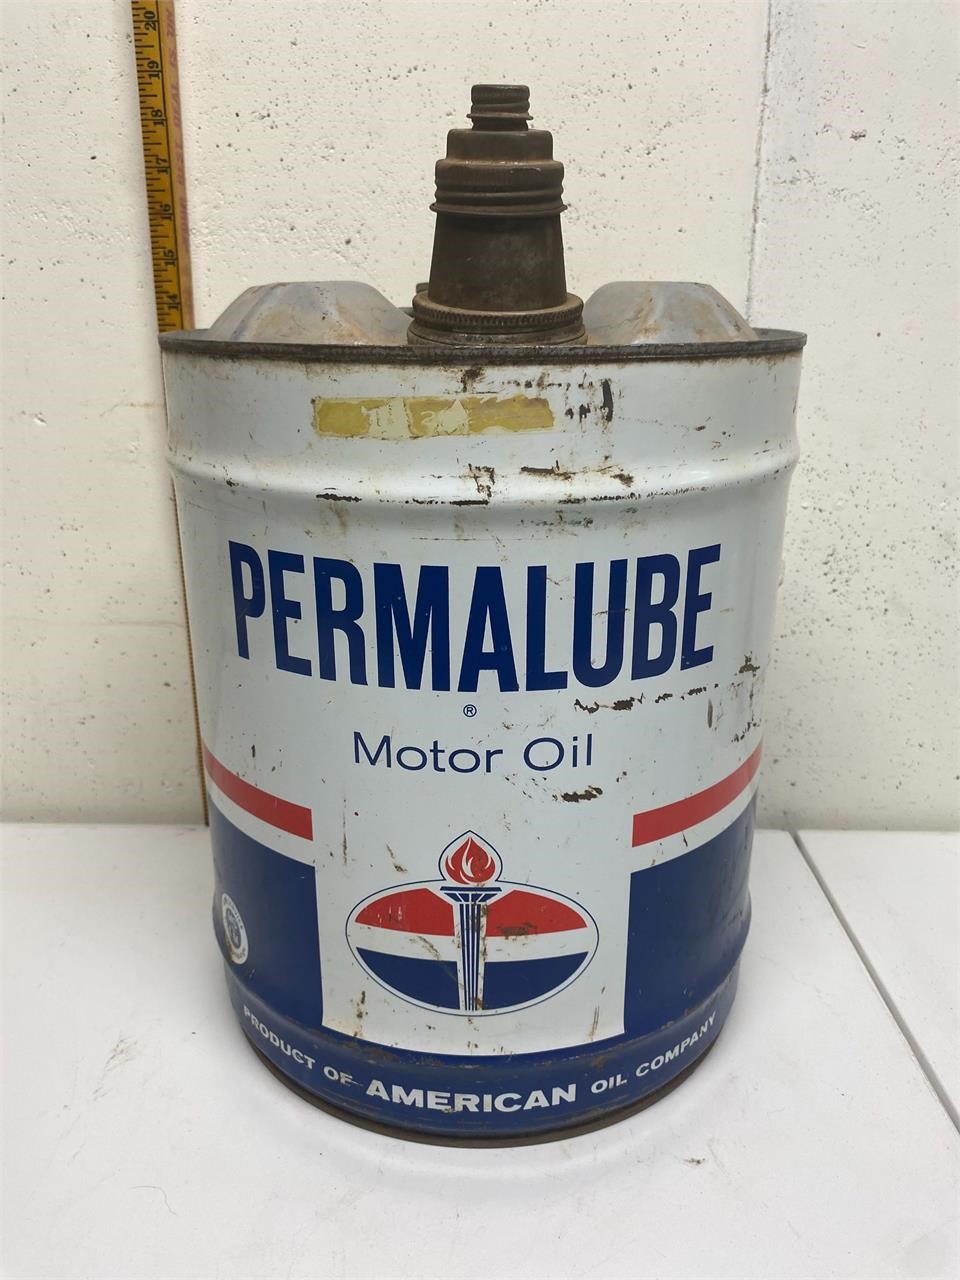 Permalube oil can